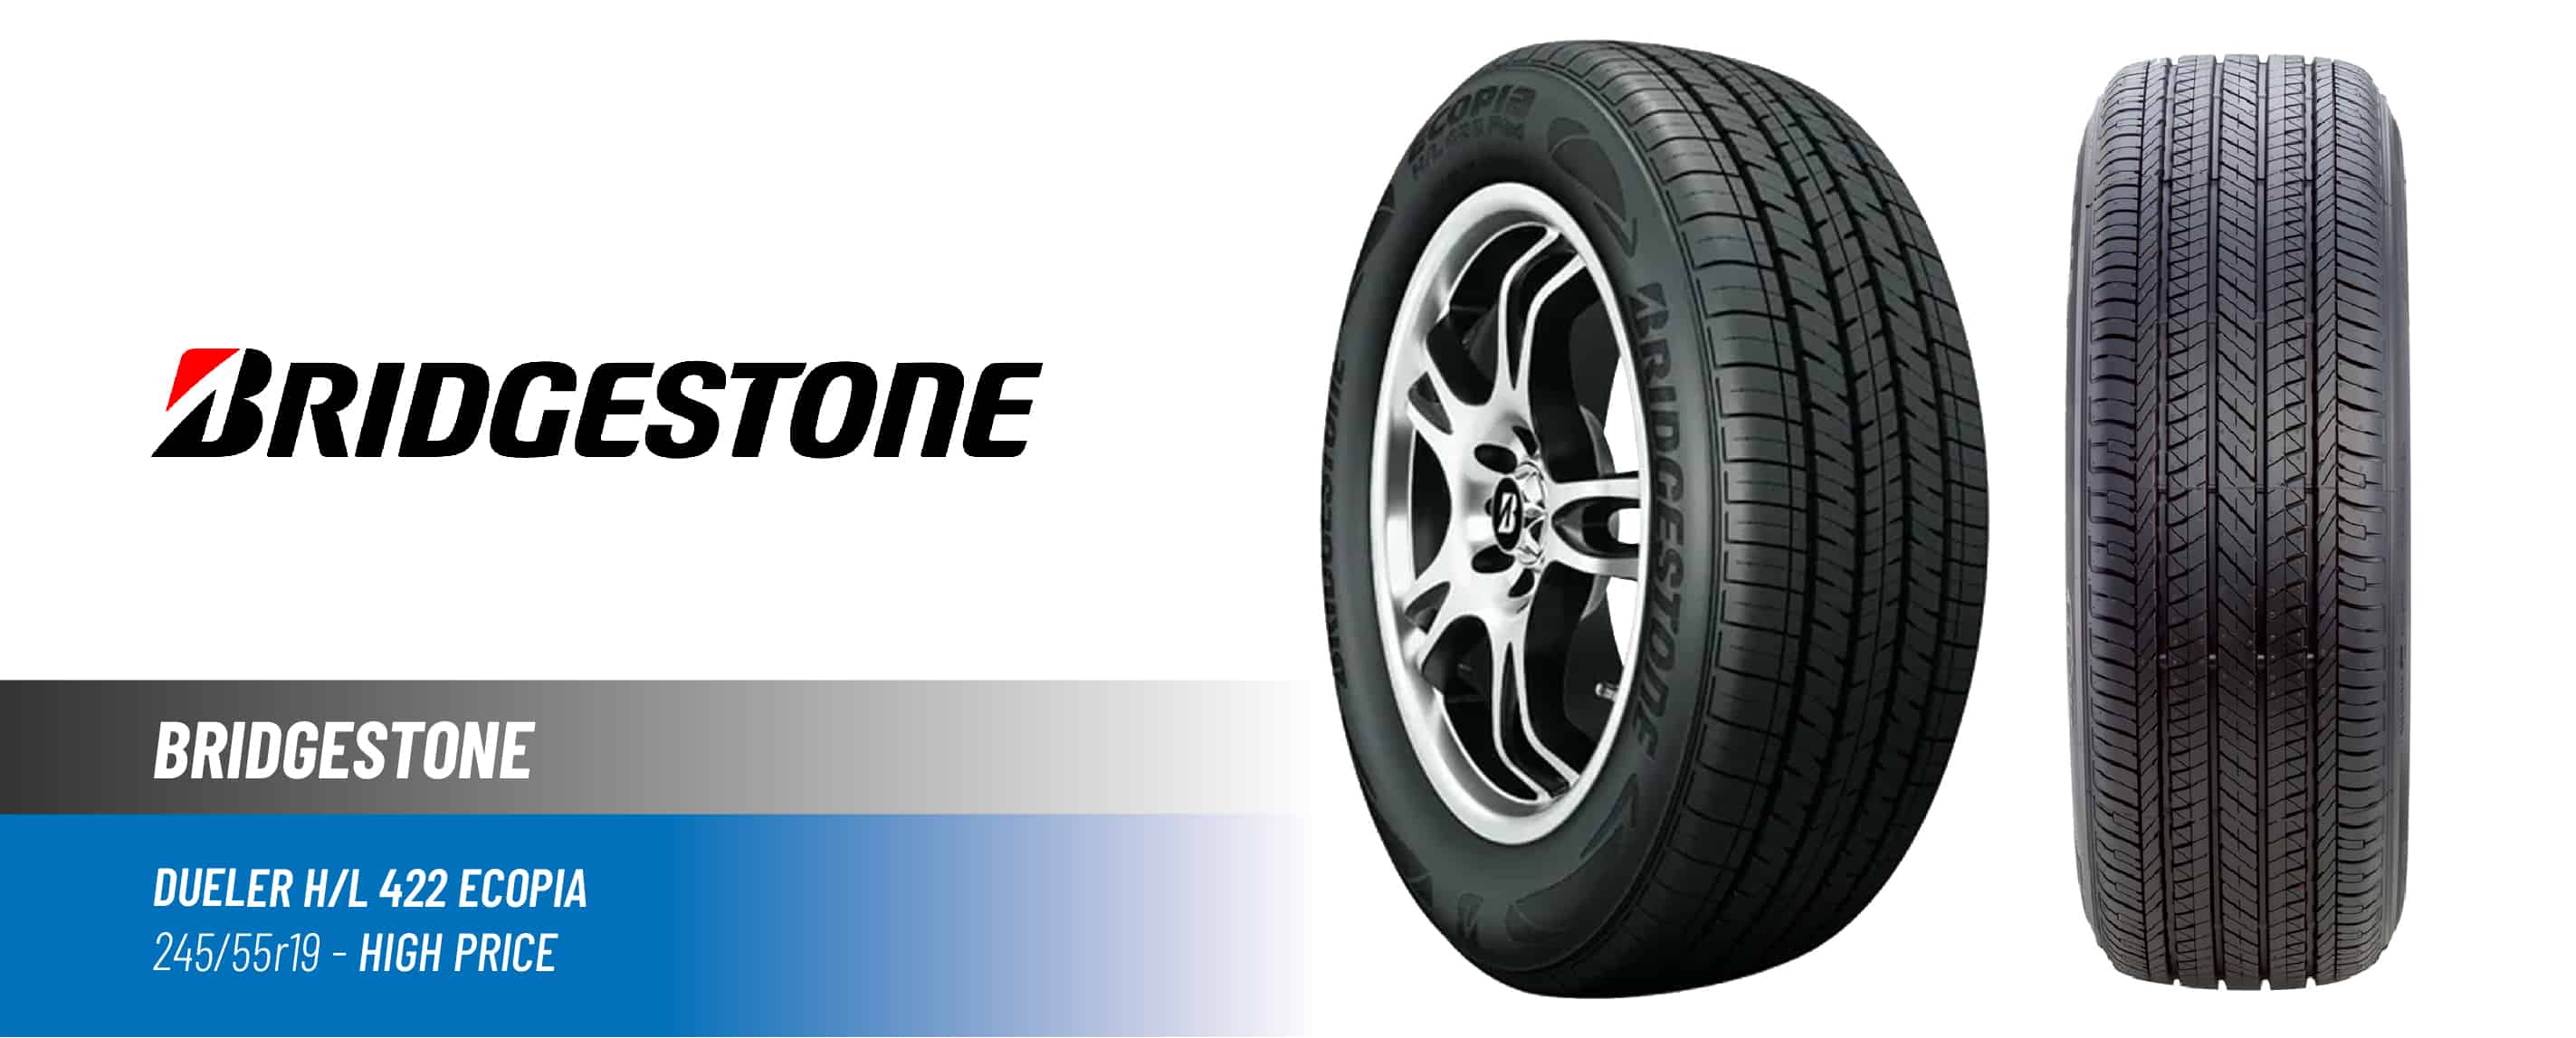 Top#3 High Price: Bridgestone Dueler H/L 422 Ecopia –best 245/55r19